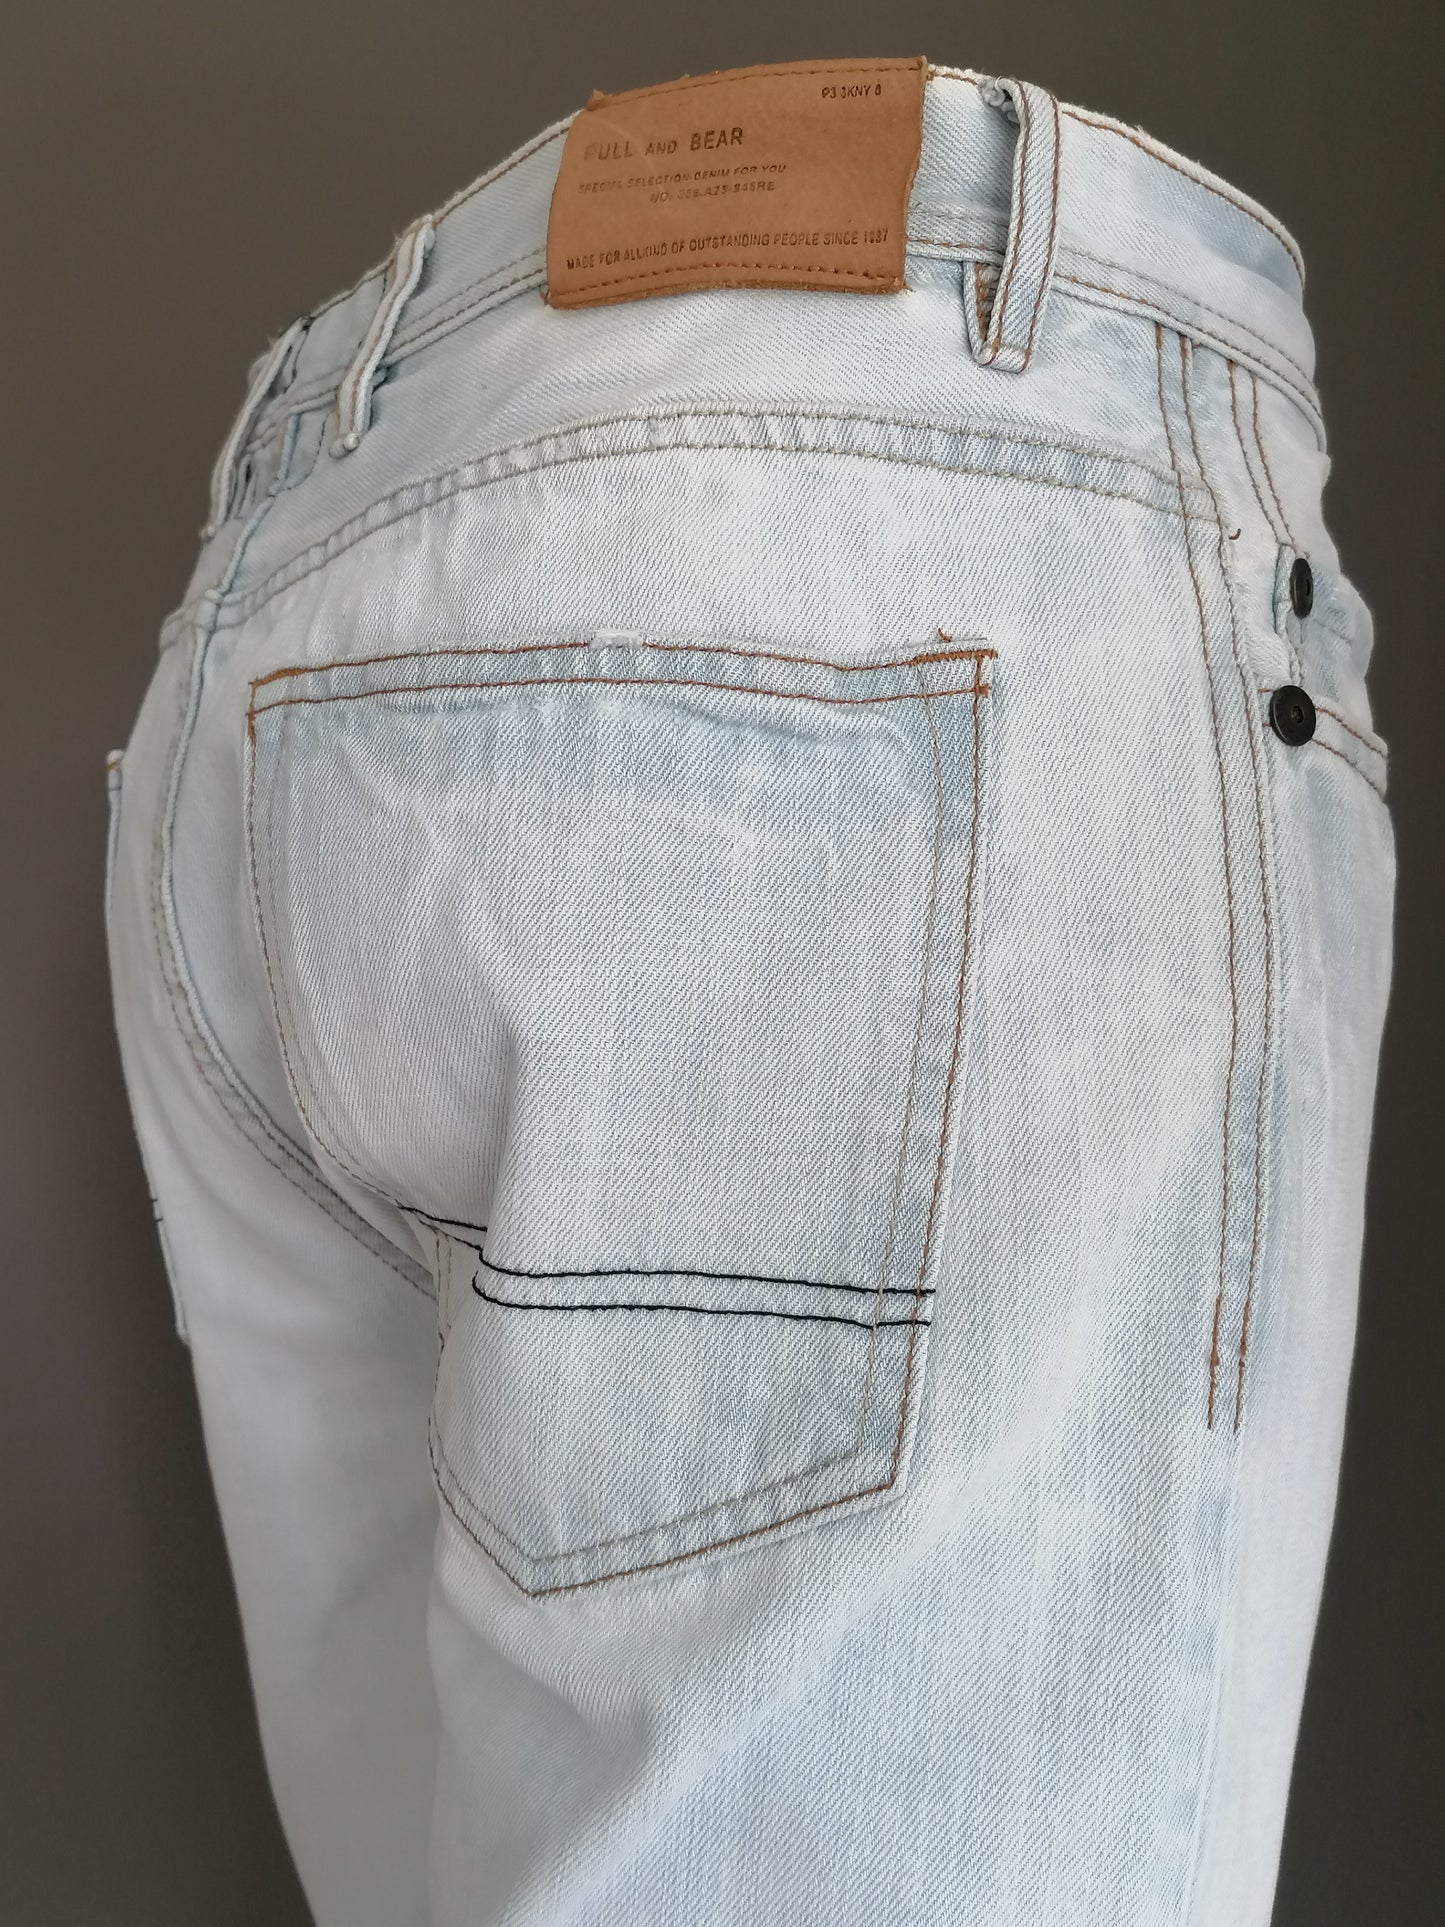 Pull & Bear korte broek jeans. Blauw gekleurd. Maat W32.